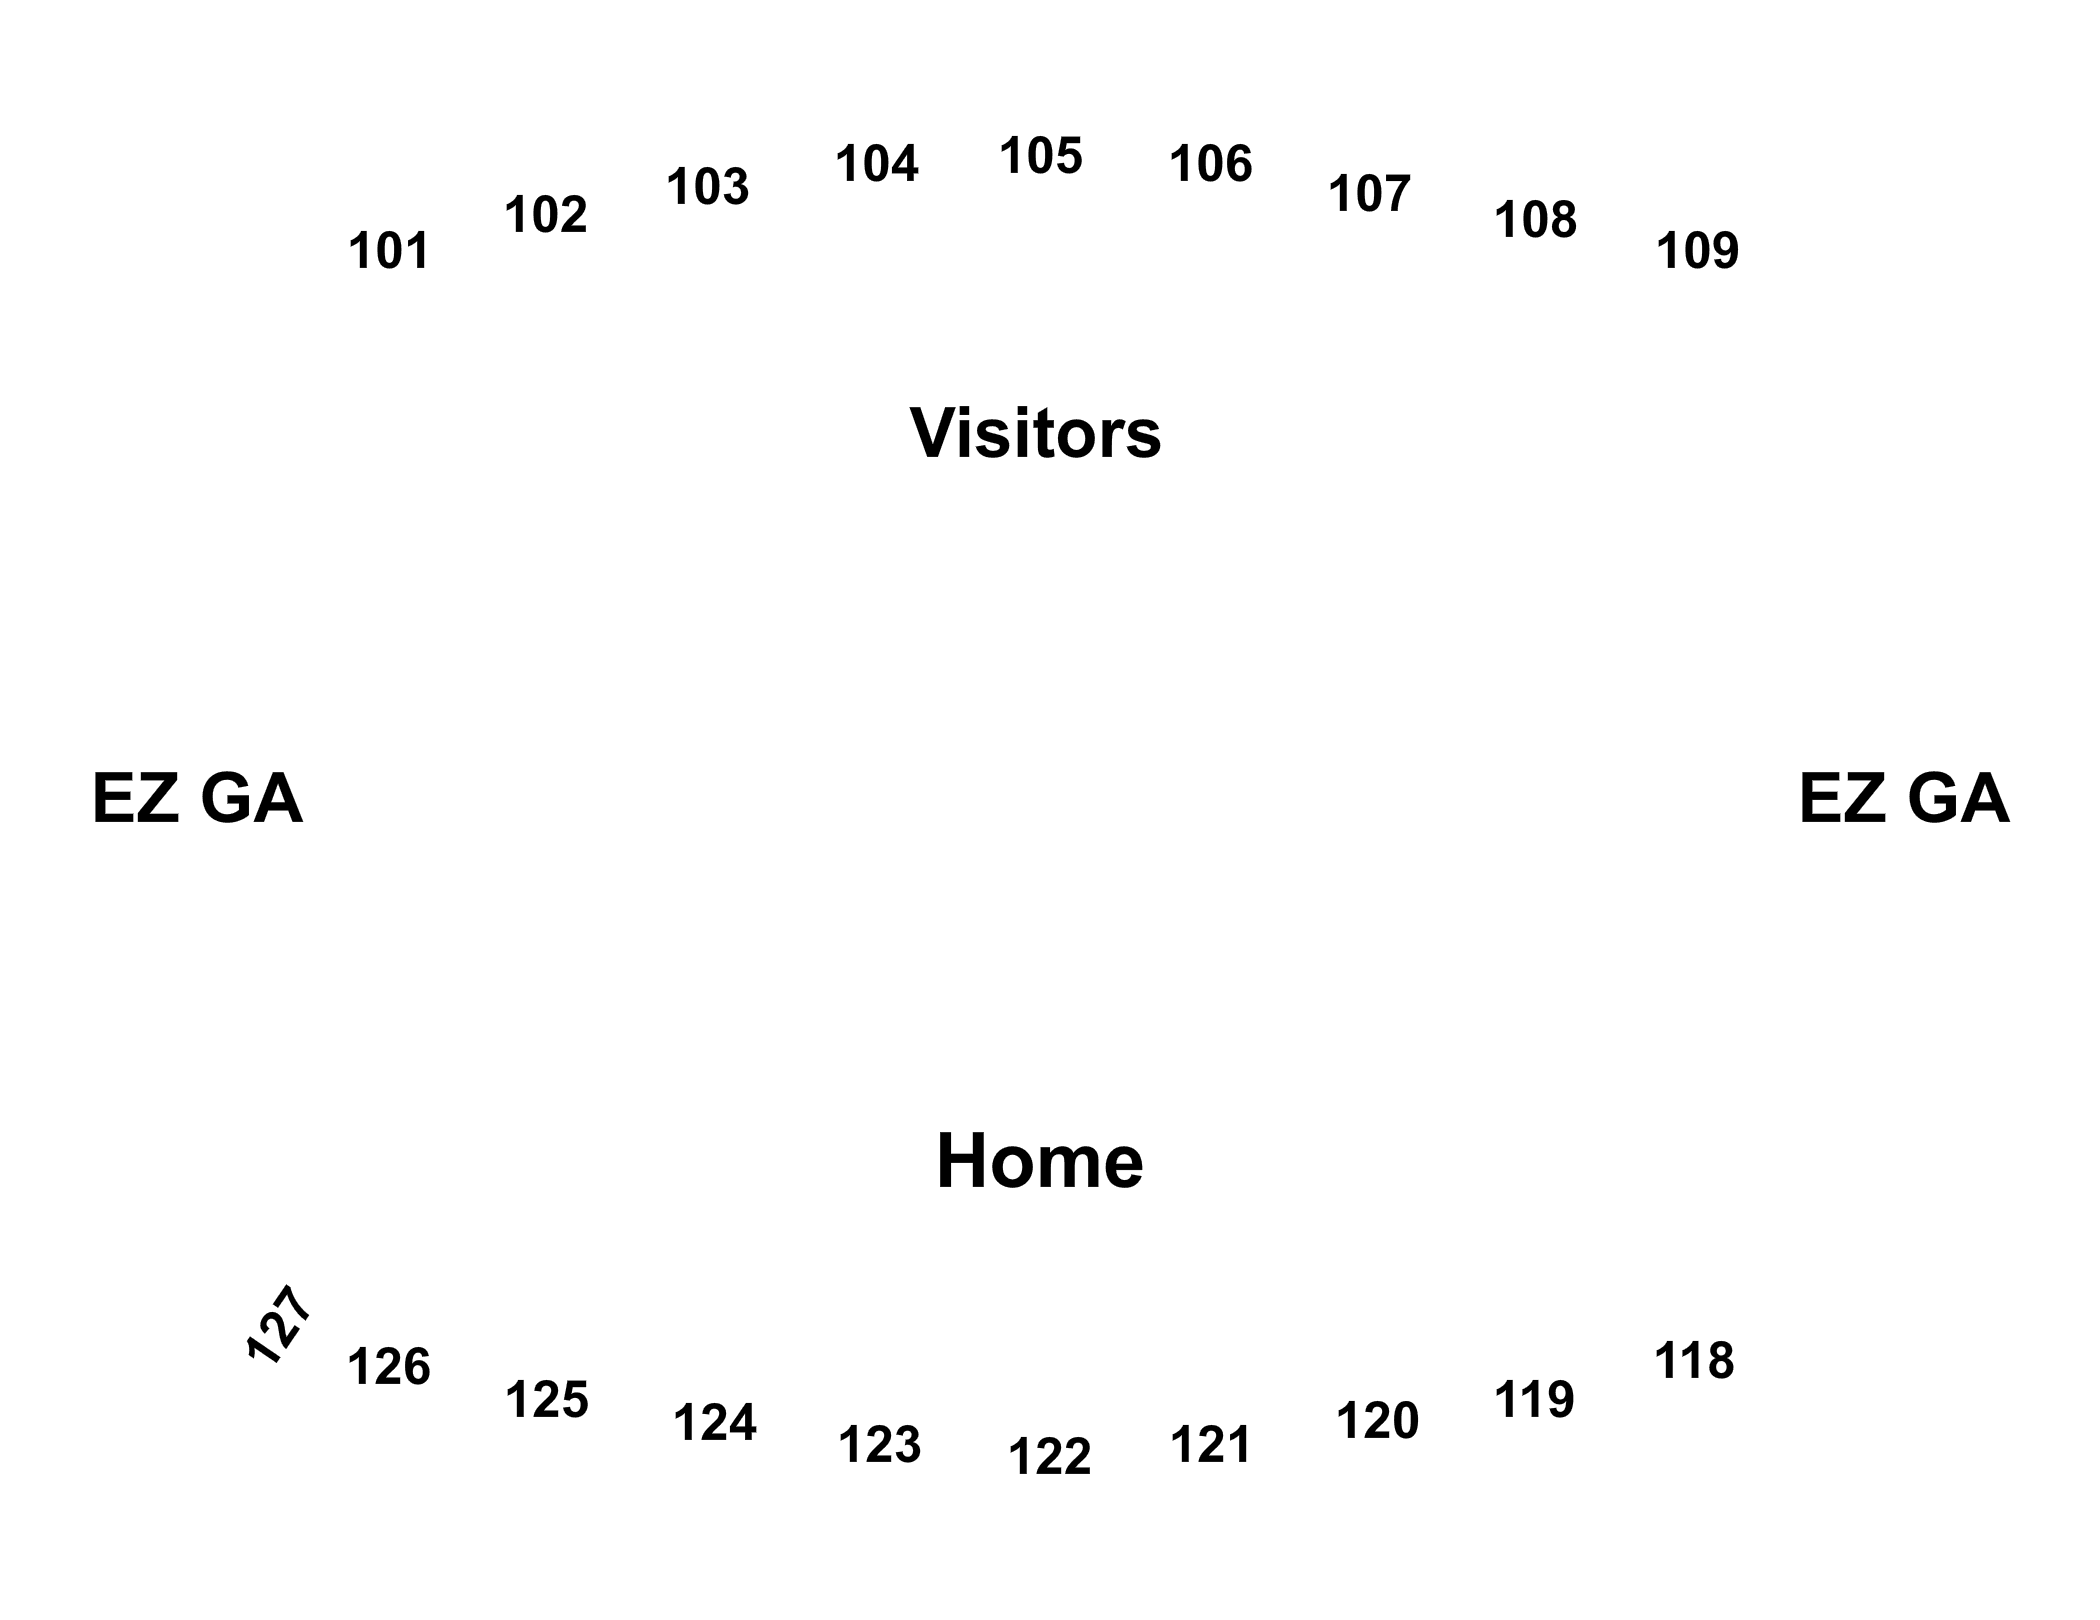 Uc Davis Football Stadium Seating Chart